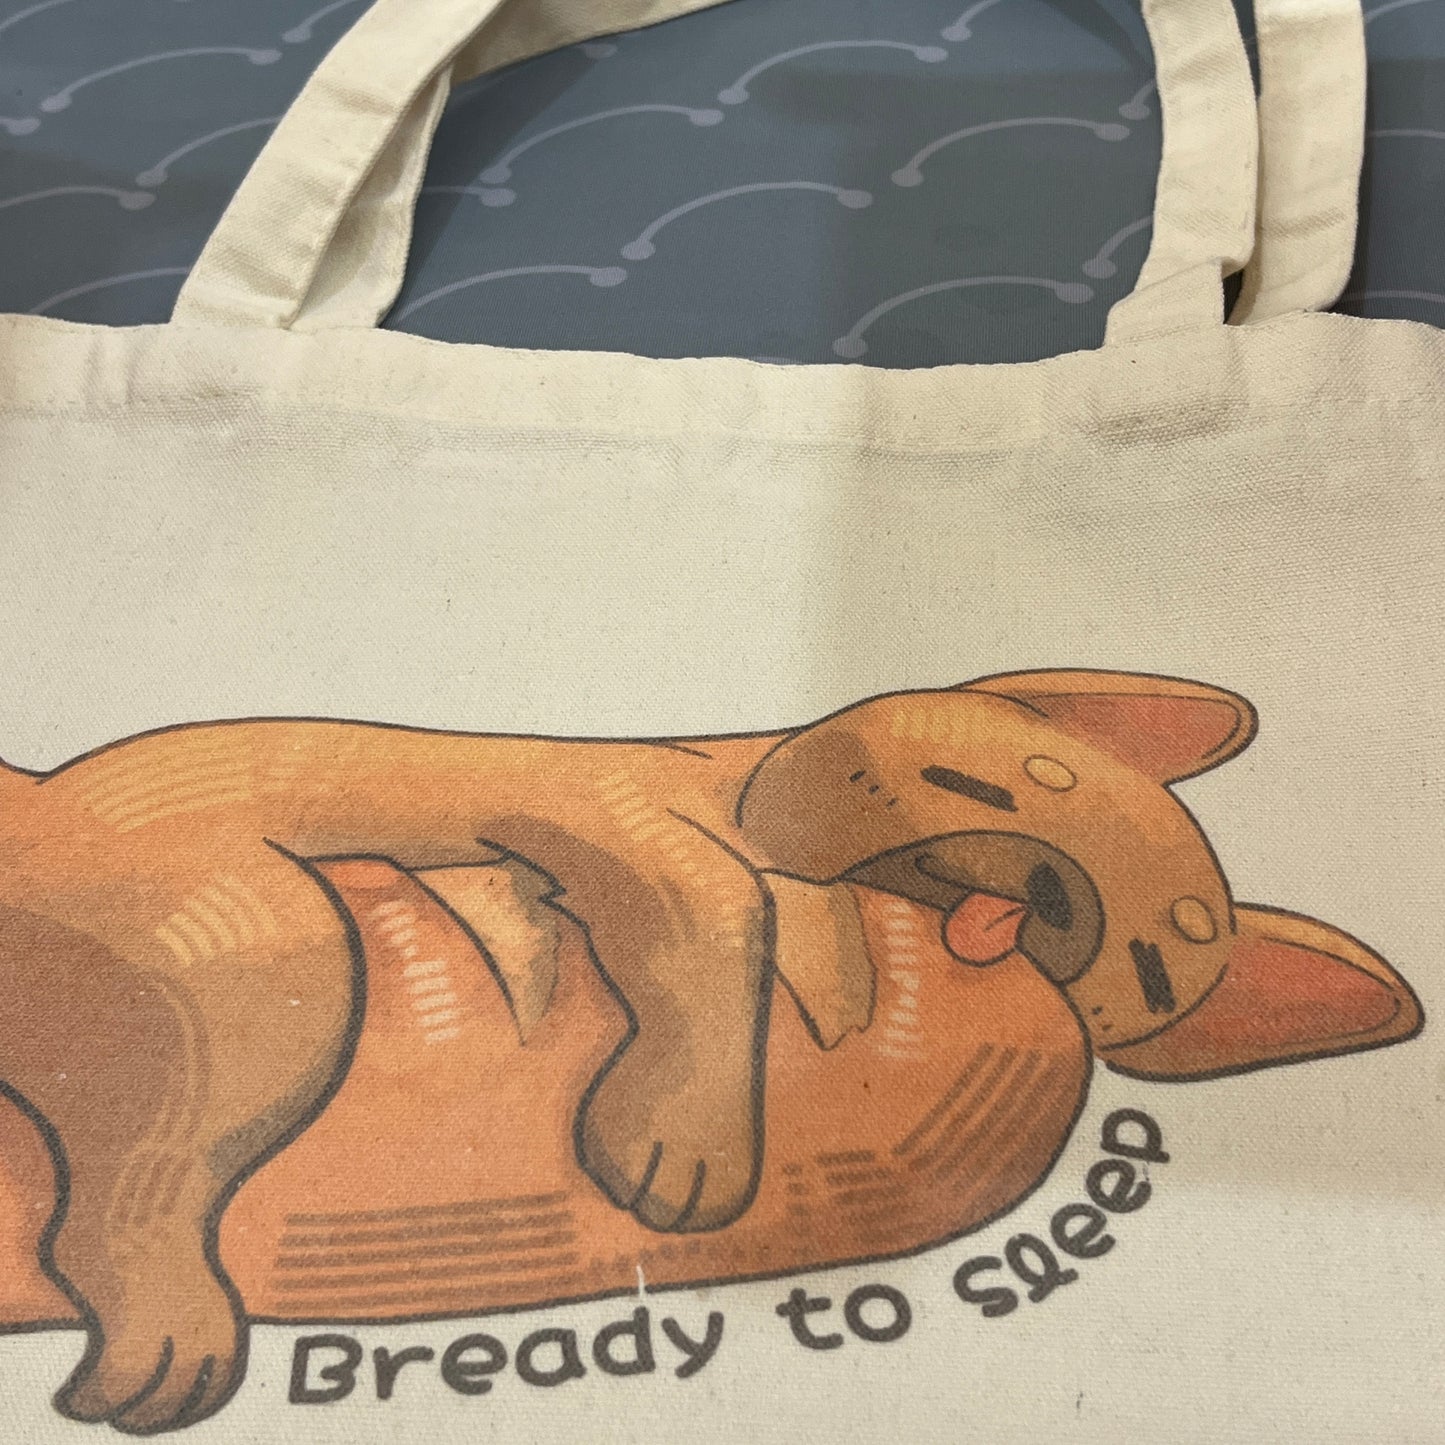 Frenchie Bread Bready to Sleep French Bulldog Small Canvas Totes - Shoulder Bag - Handbag - Casual Tote - Shopping Bag #Tote007